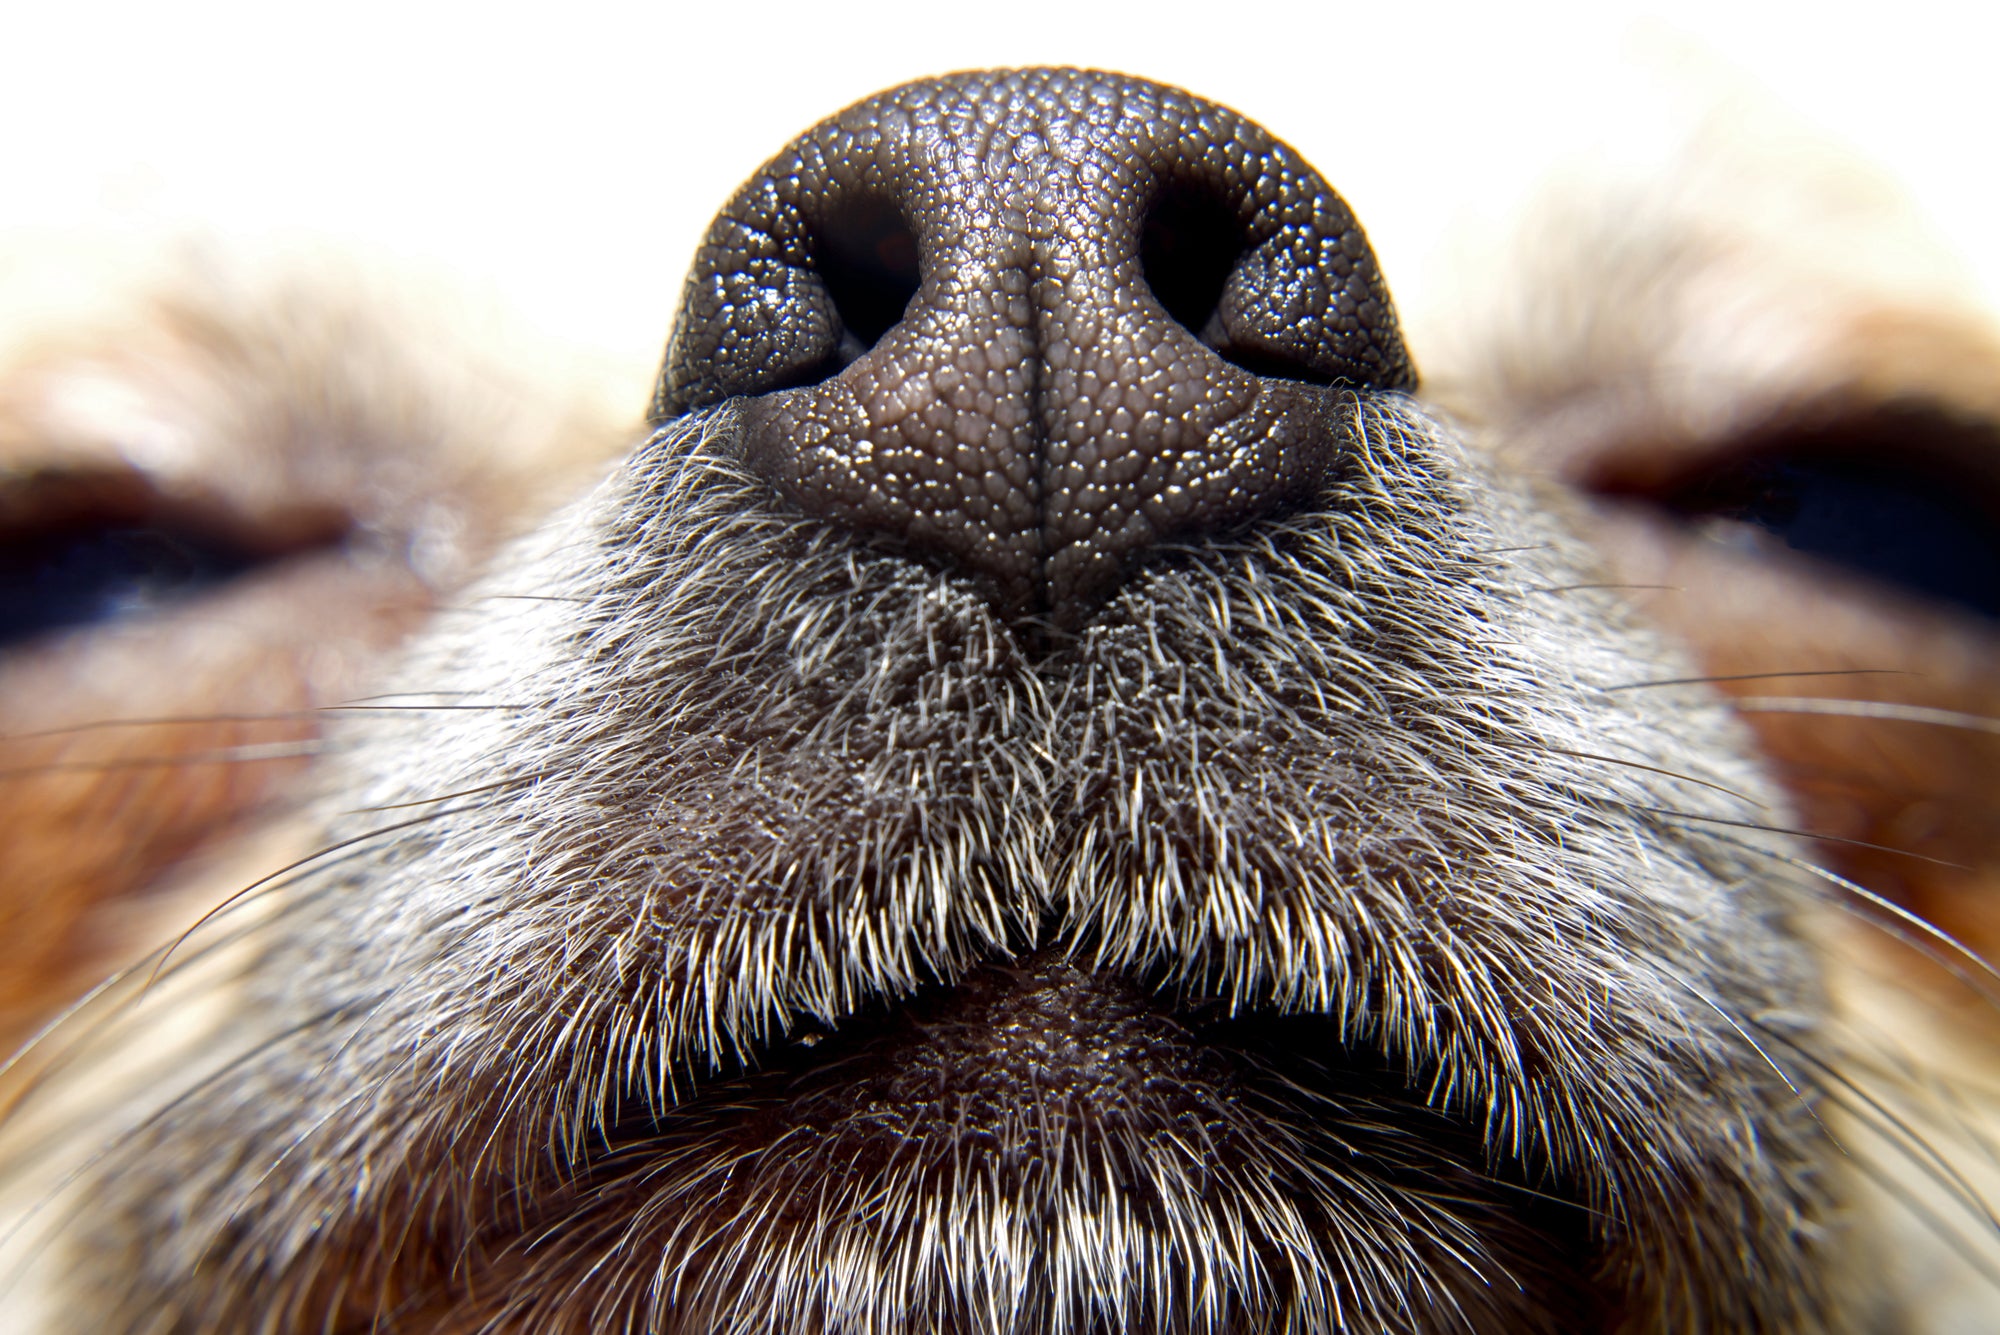 Finding Hidden Food in Nosework Increases Dogs' Optimism